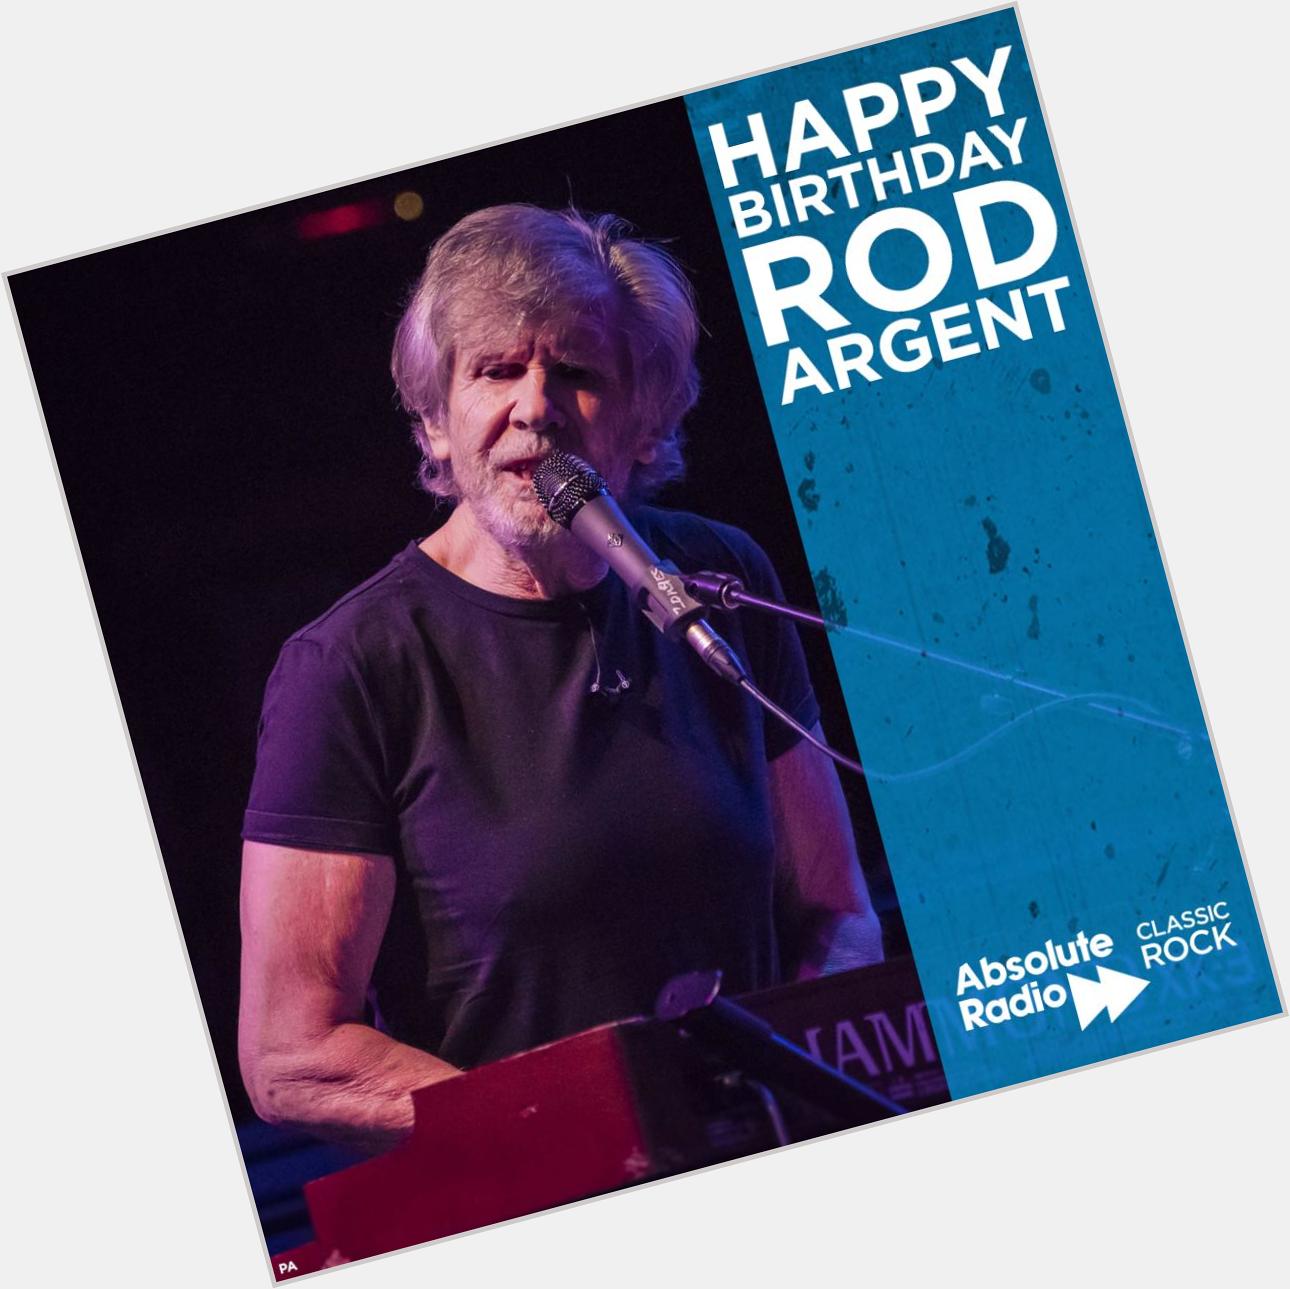 Happy birthday Rod Argent! man turns 74 today! 